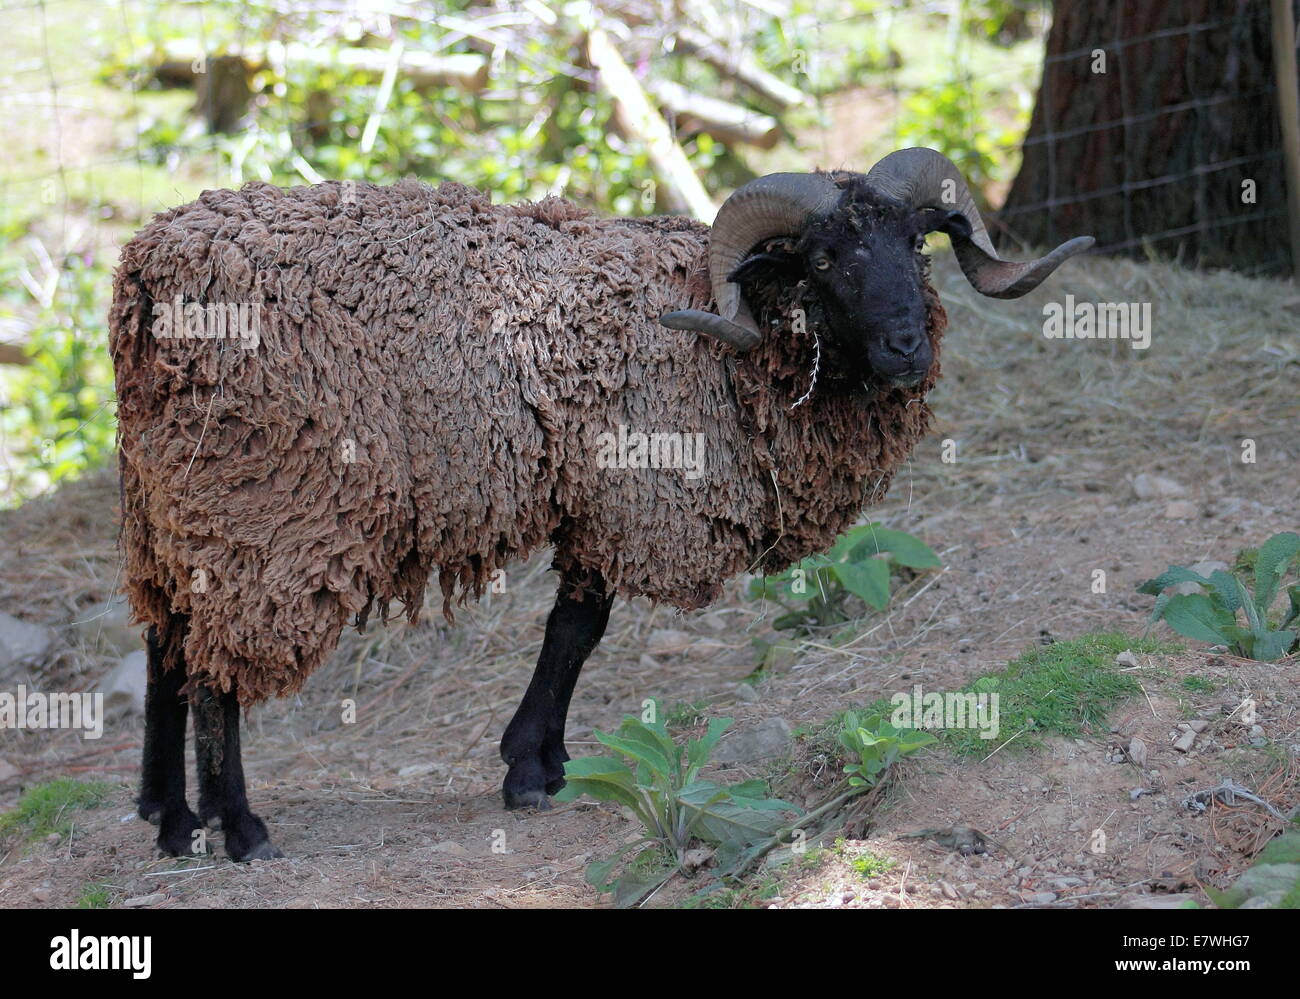 Black Eyes Sheep or Ram Animal in Stall Close Up. Sheep or ram standing in  wood stall. Cute sheep or ram looking camera Stock Photo - Alamy